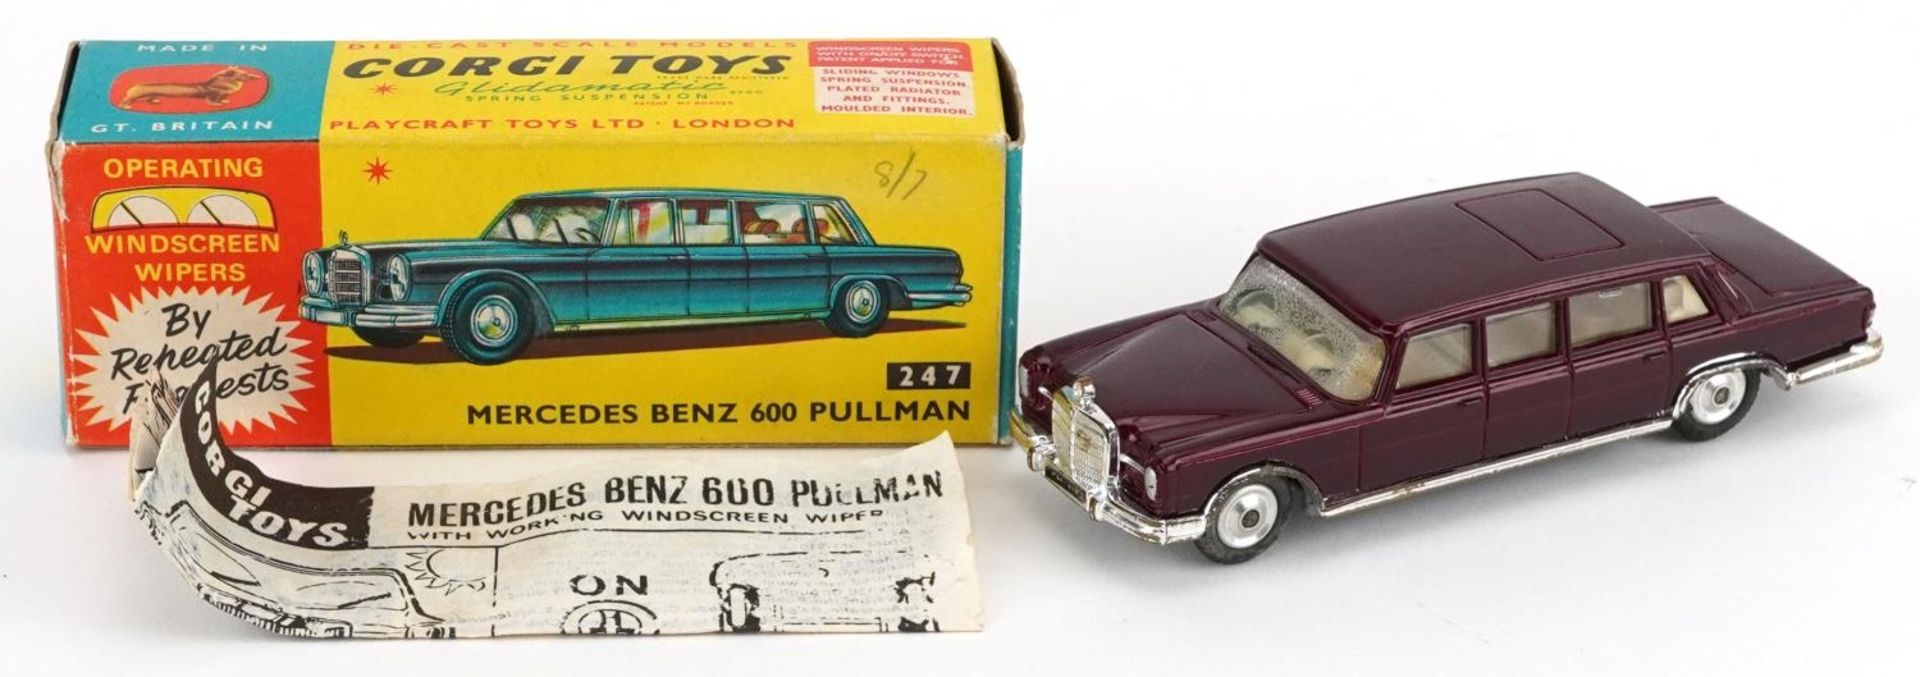 Vintage Corgi Toys diecast Mercedes Benz 600 Pullman with box numbered 247 - Bild 2 aus 5